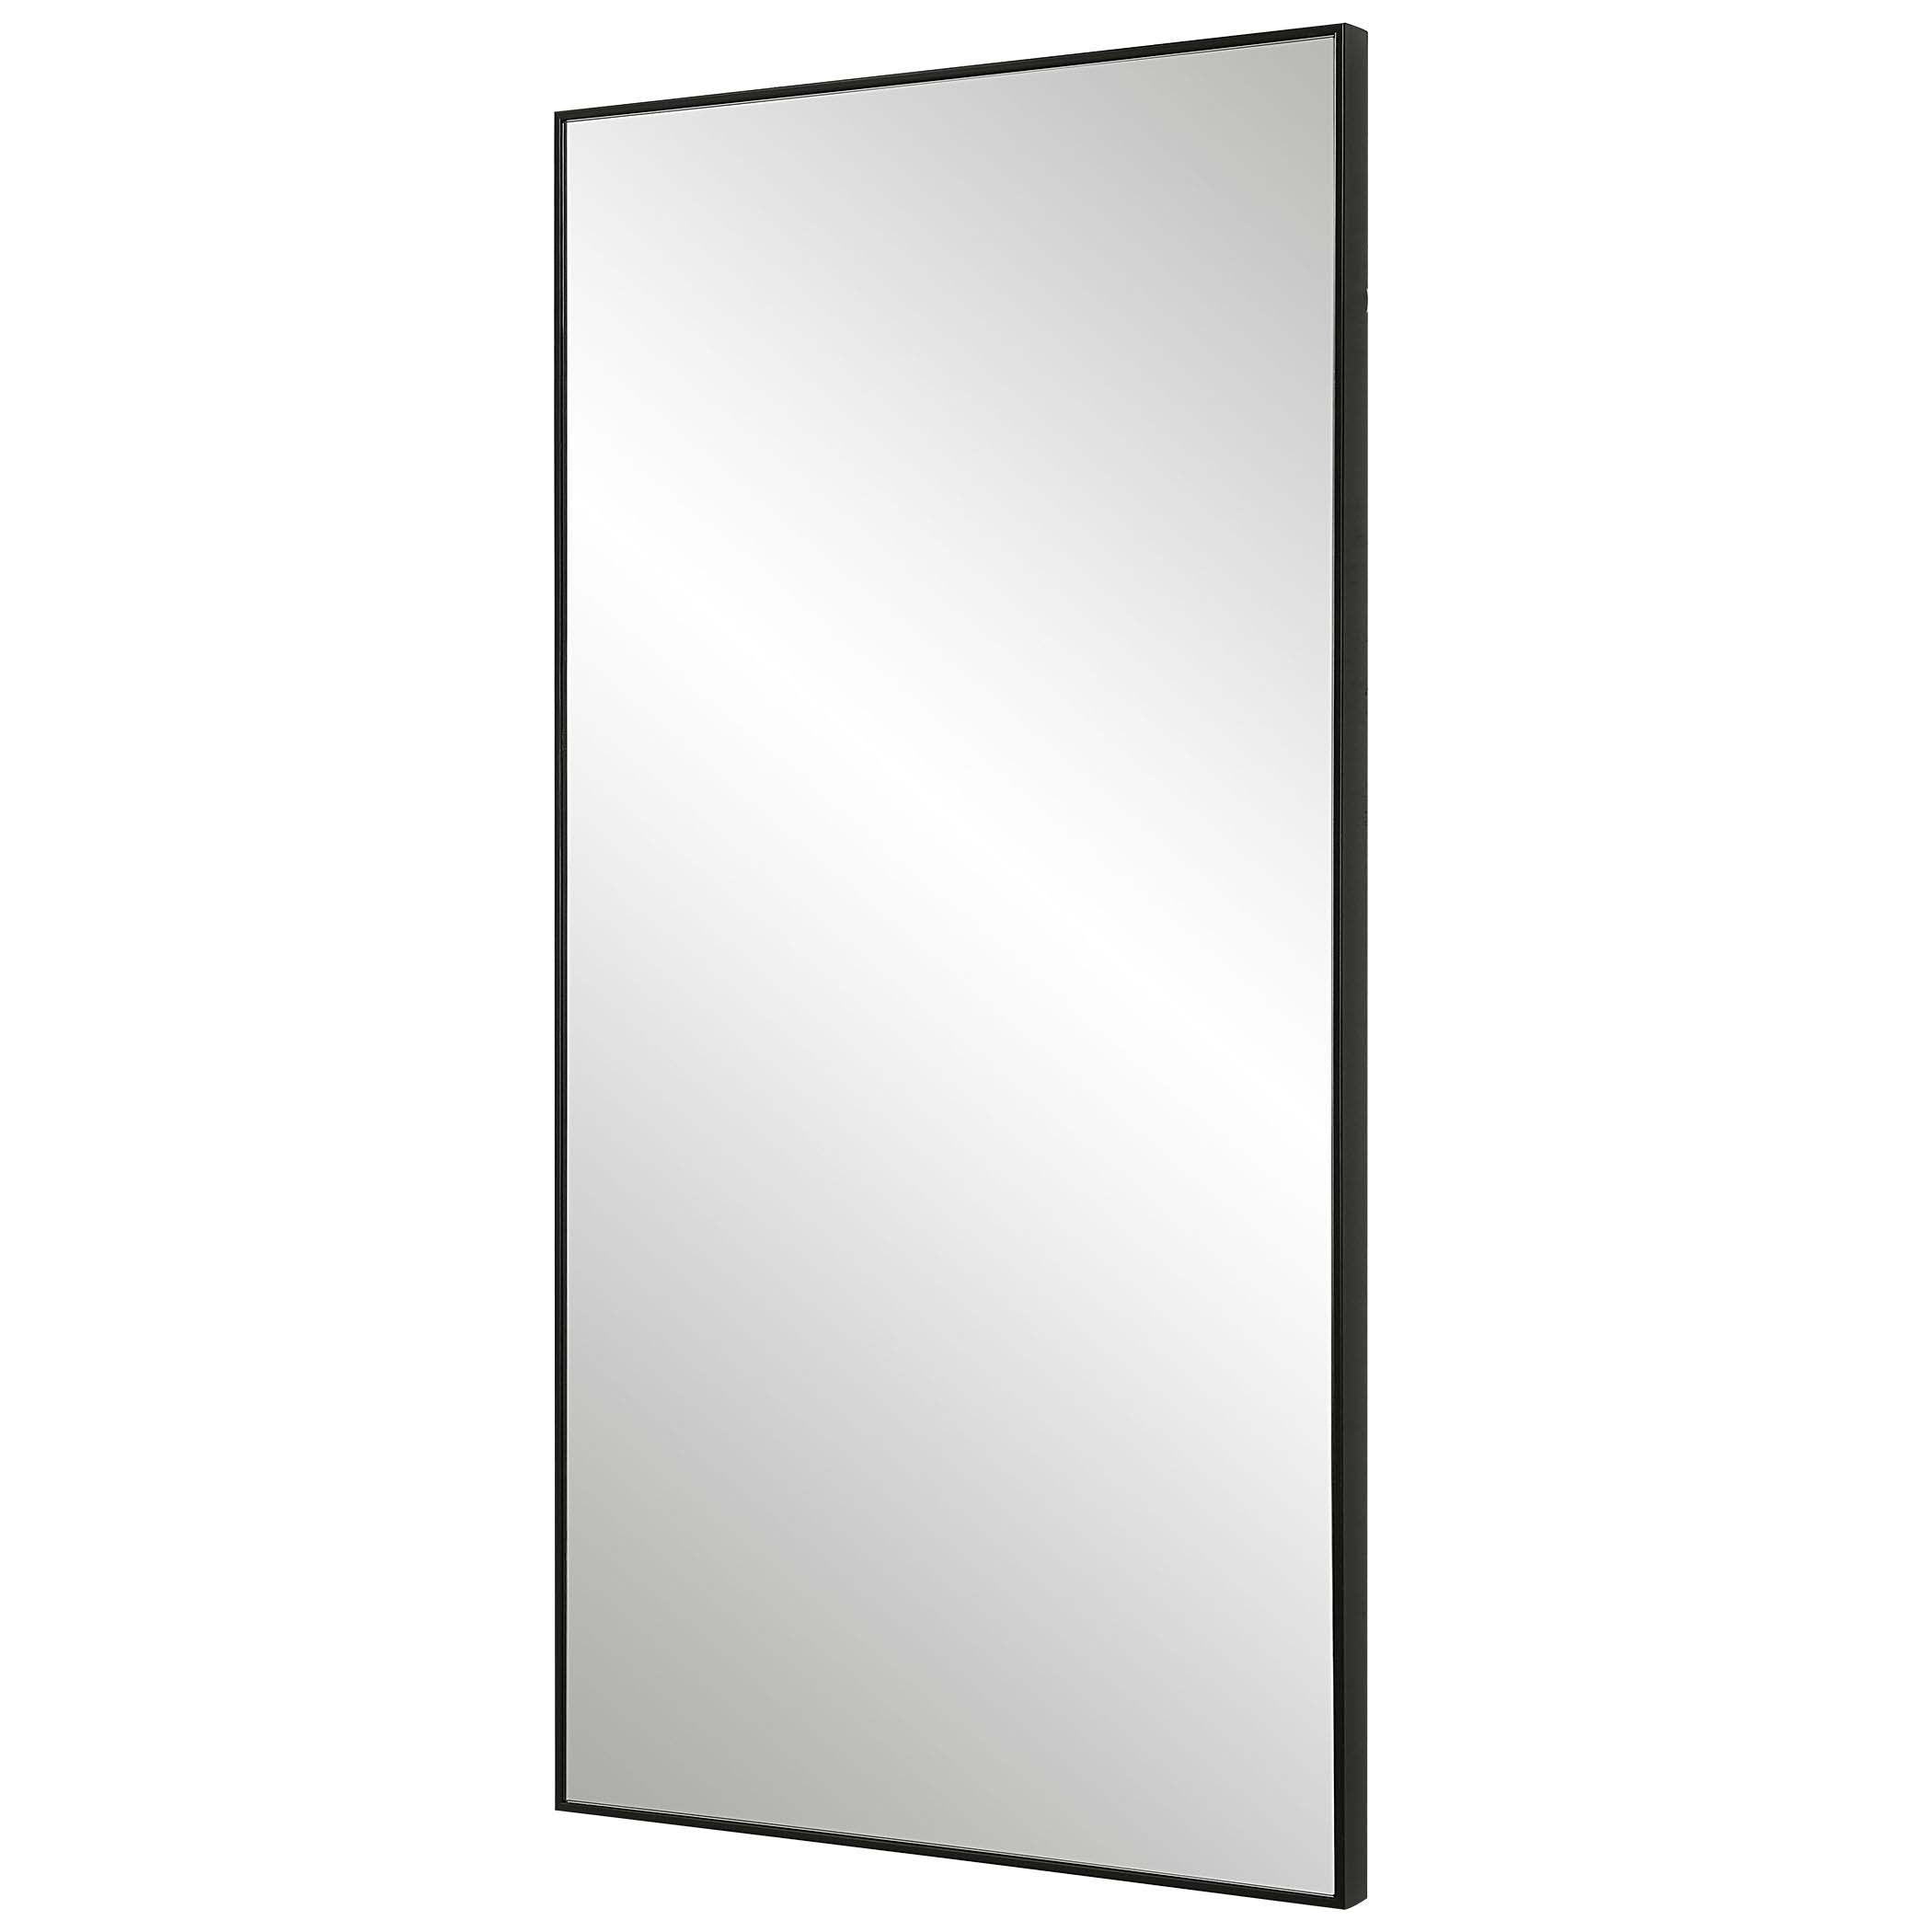 Decor Market Mirror - Black Finish With Plain Mirror